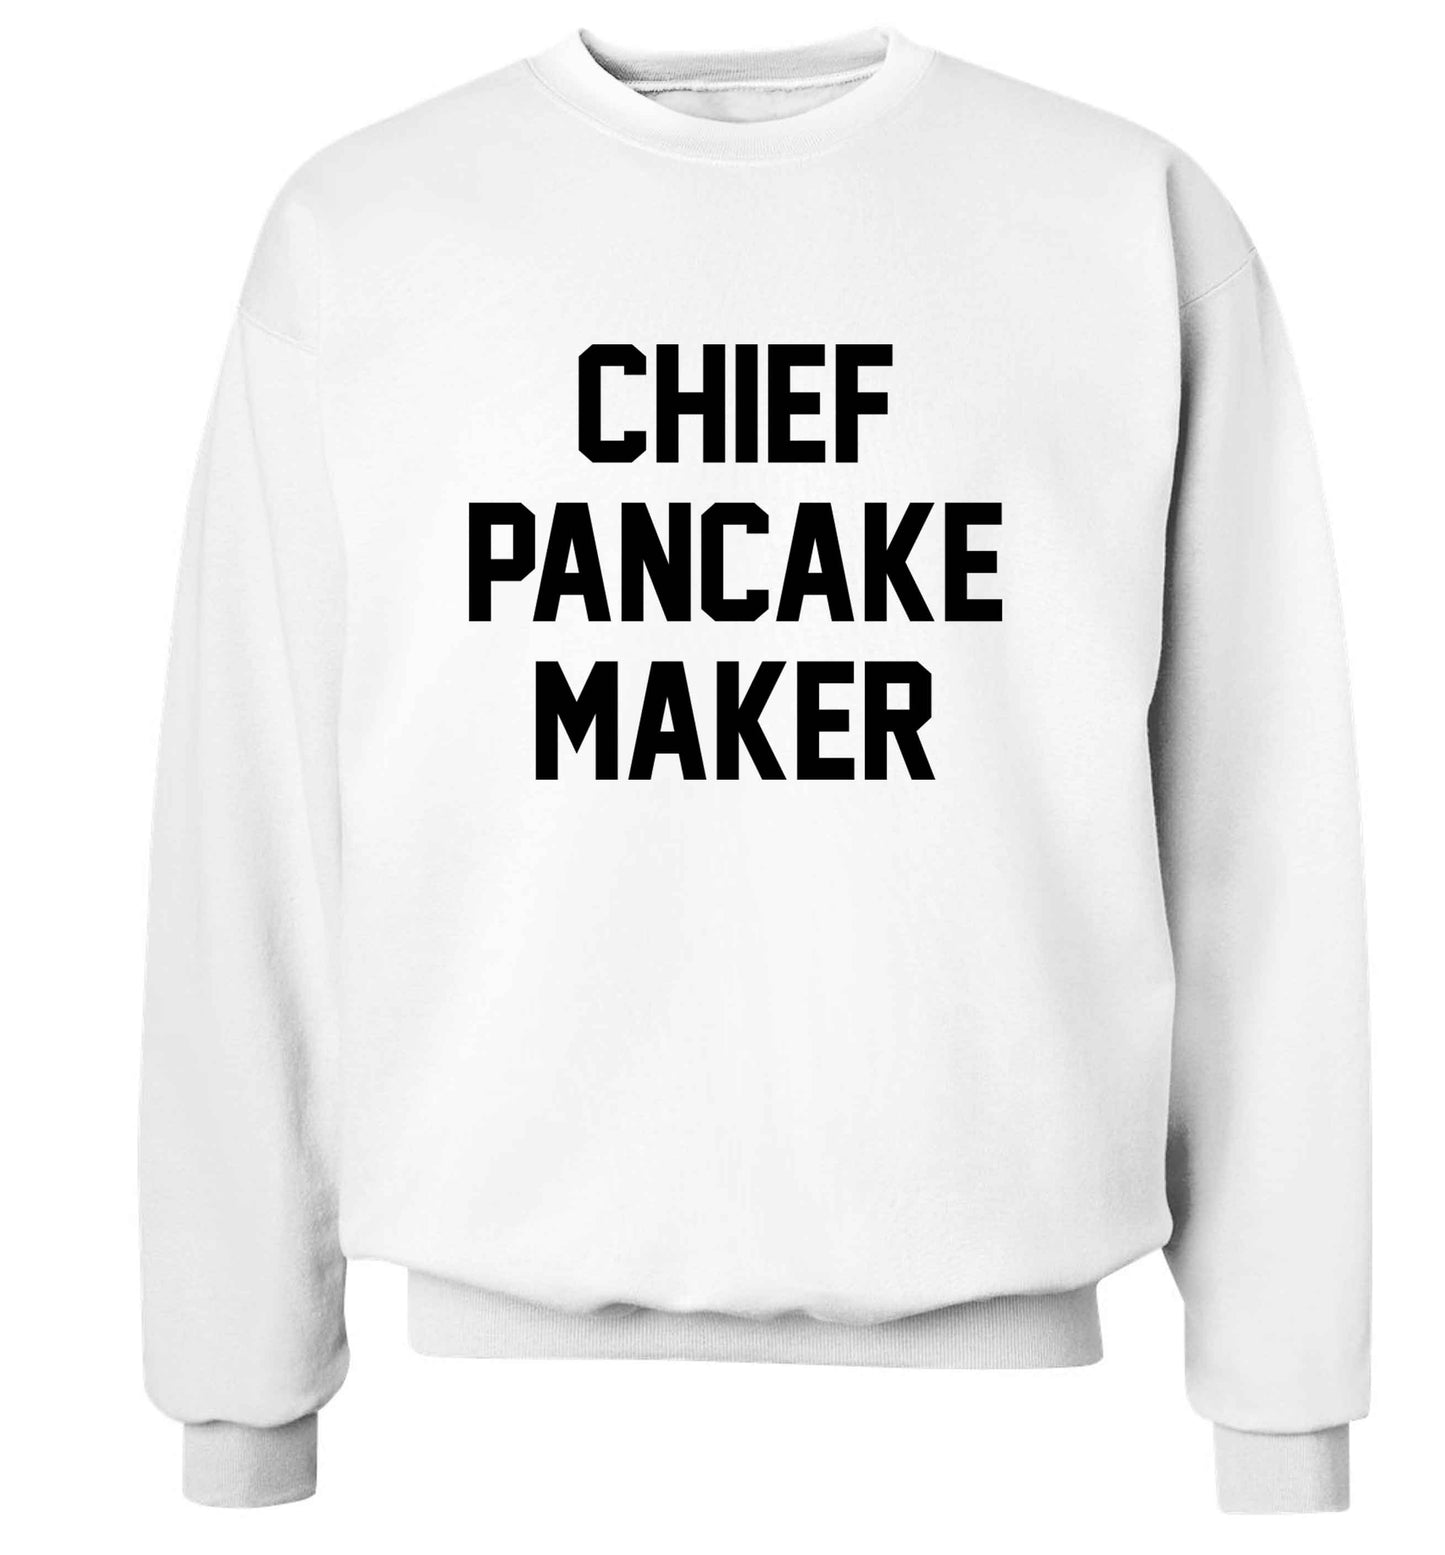 Chief pancake maker adult's unisex white sweater 2XL